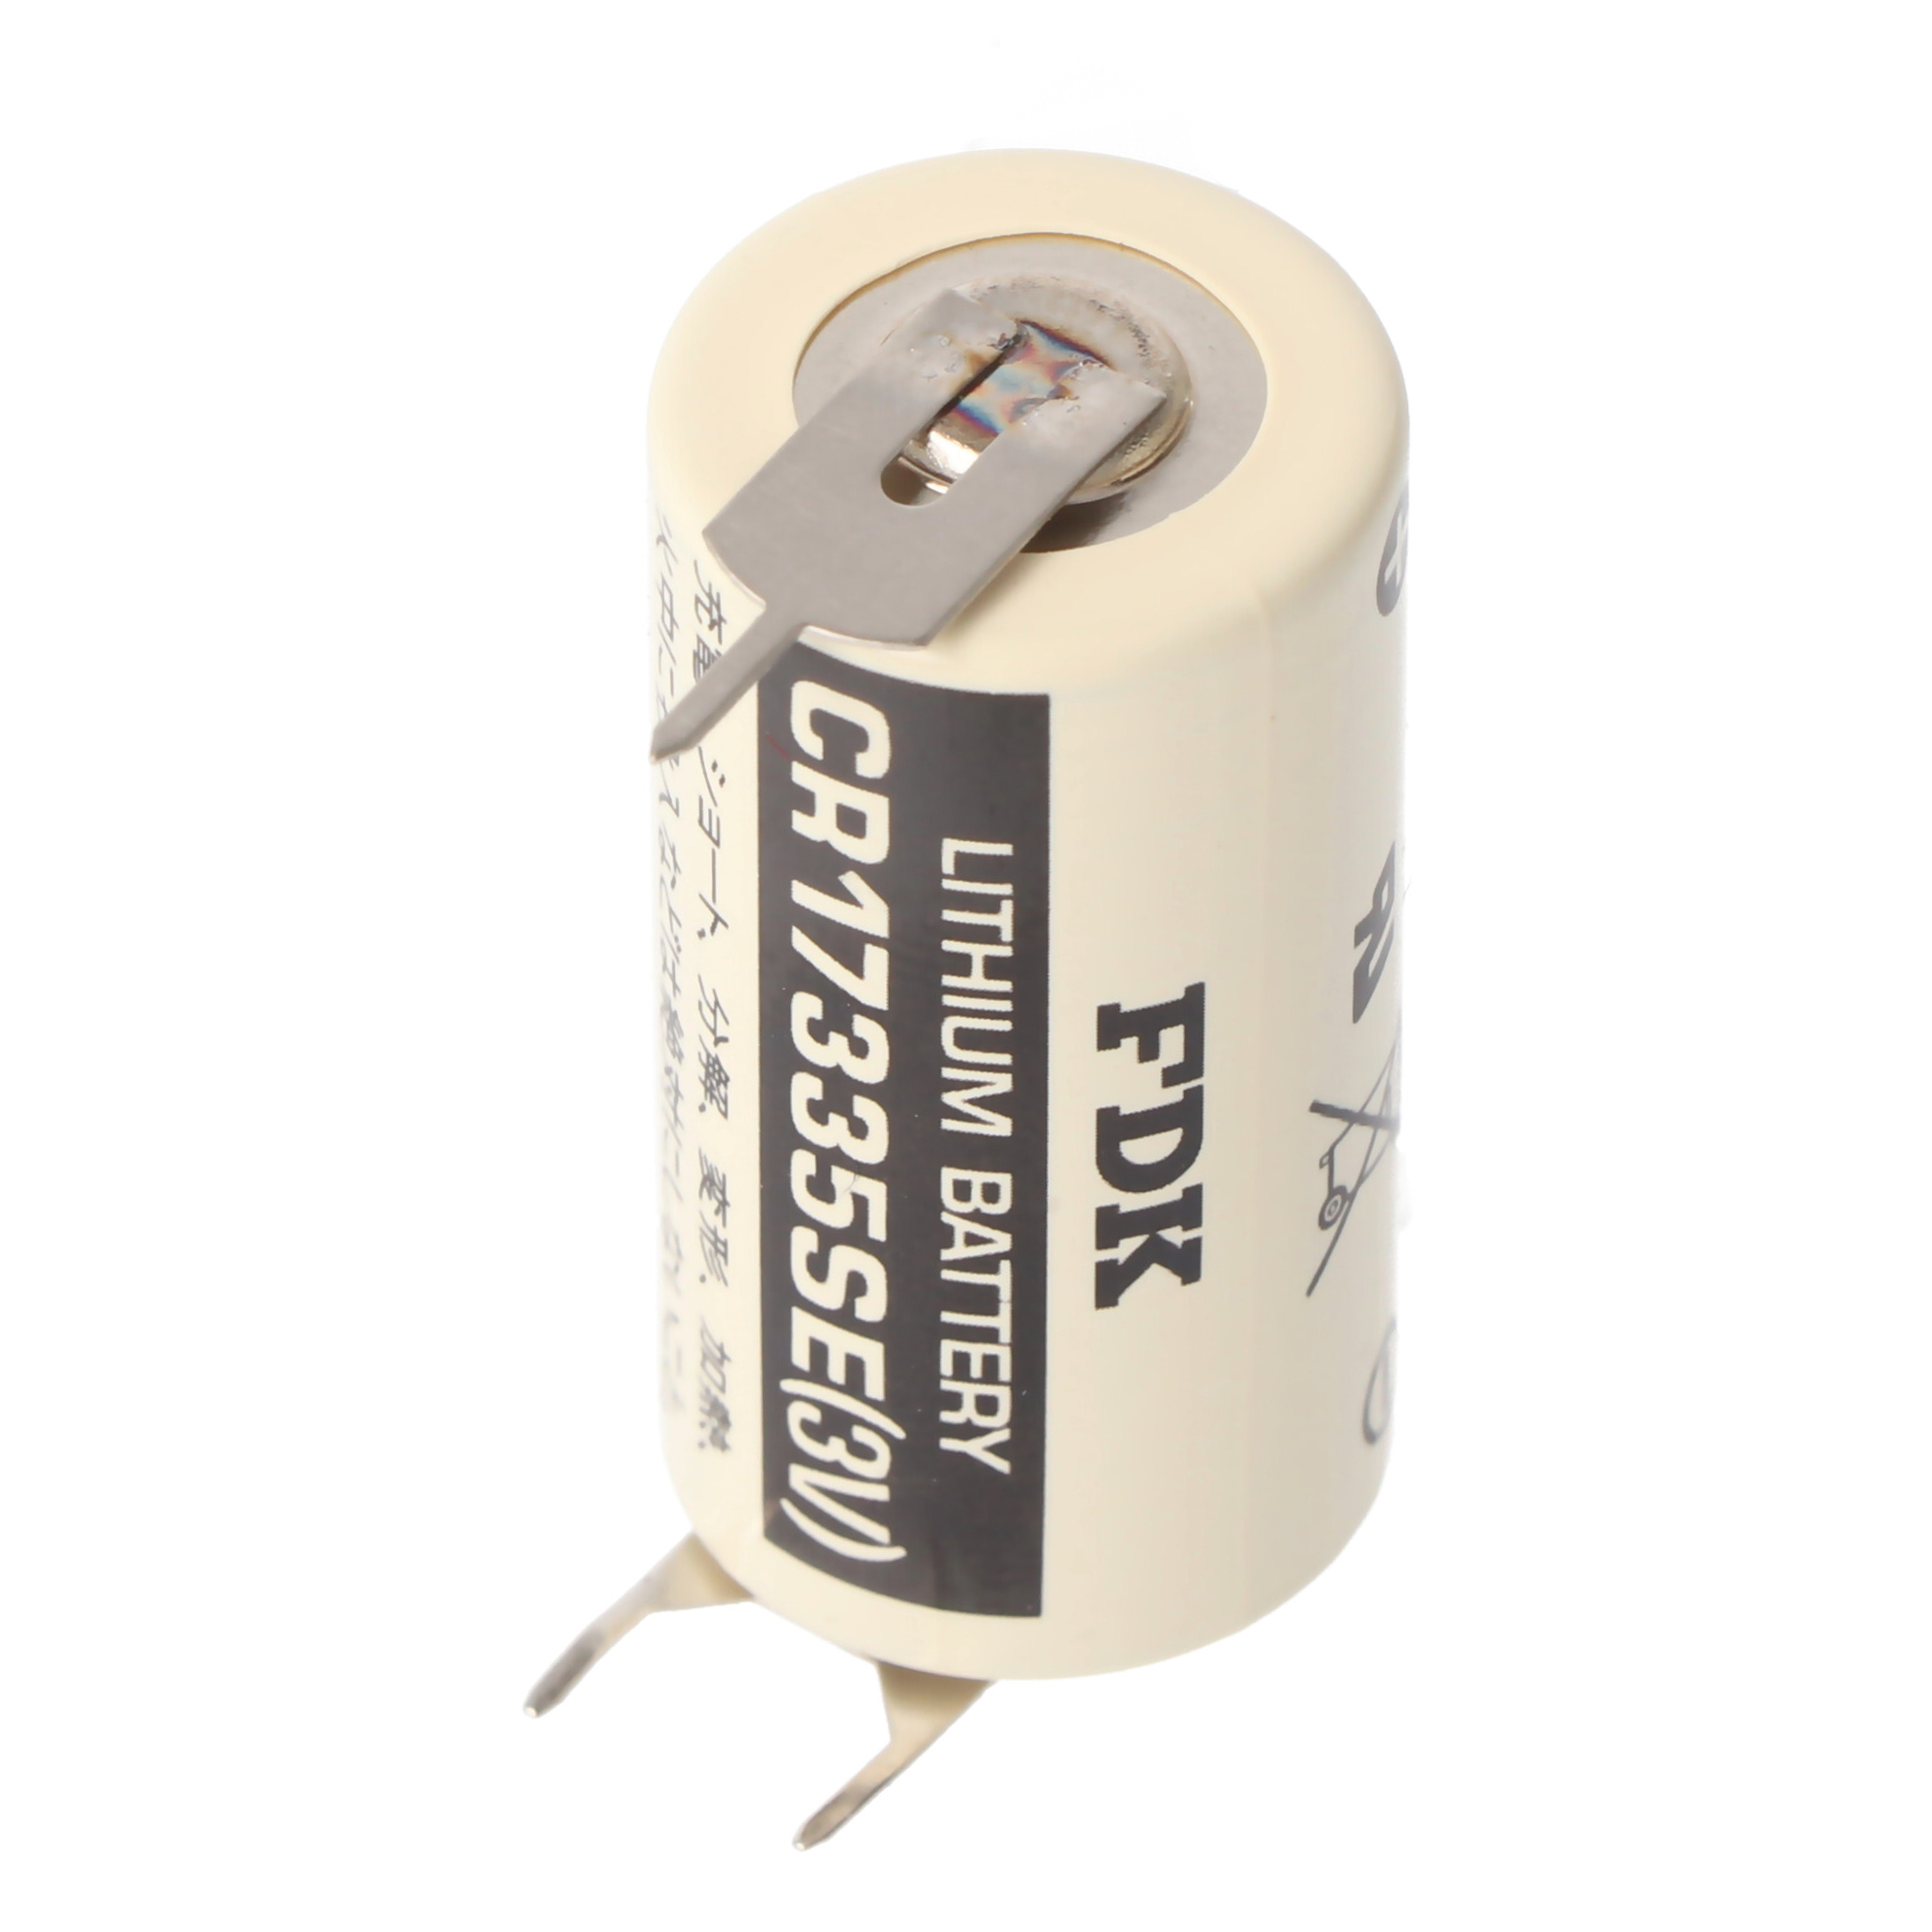 Sanyo Lithium Batterie CR17335 SE Size 2/3A, 3er Print Lötfahnen, Rastermaß 7,6mm